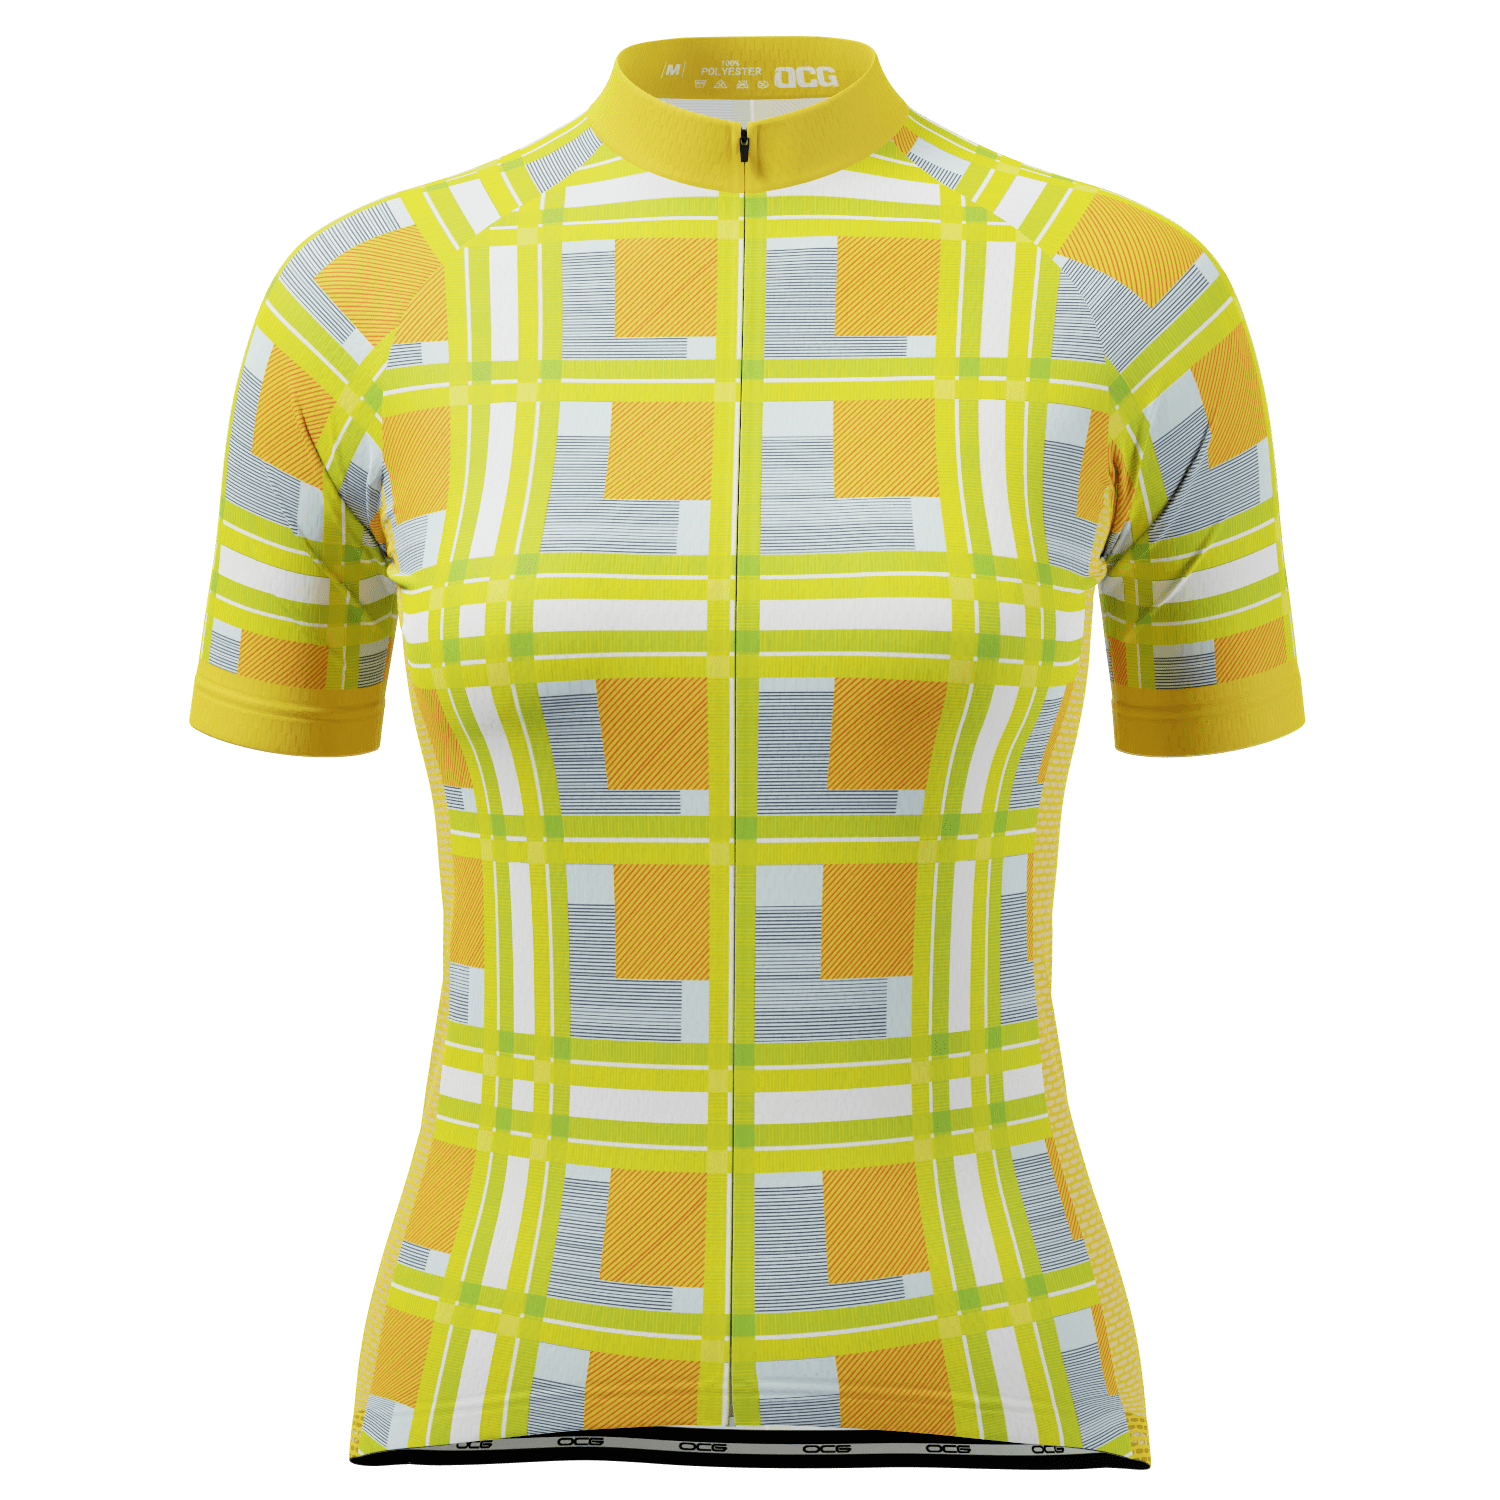 Women's Criss-Crossed Tartan Short Sleeve Cycling Jersey